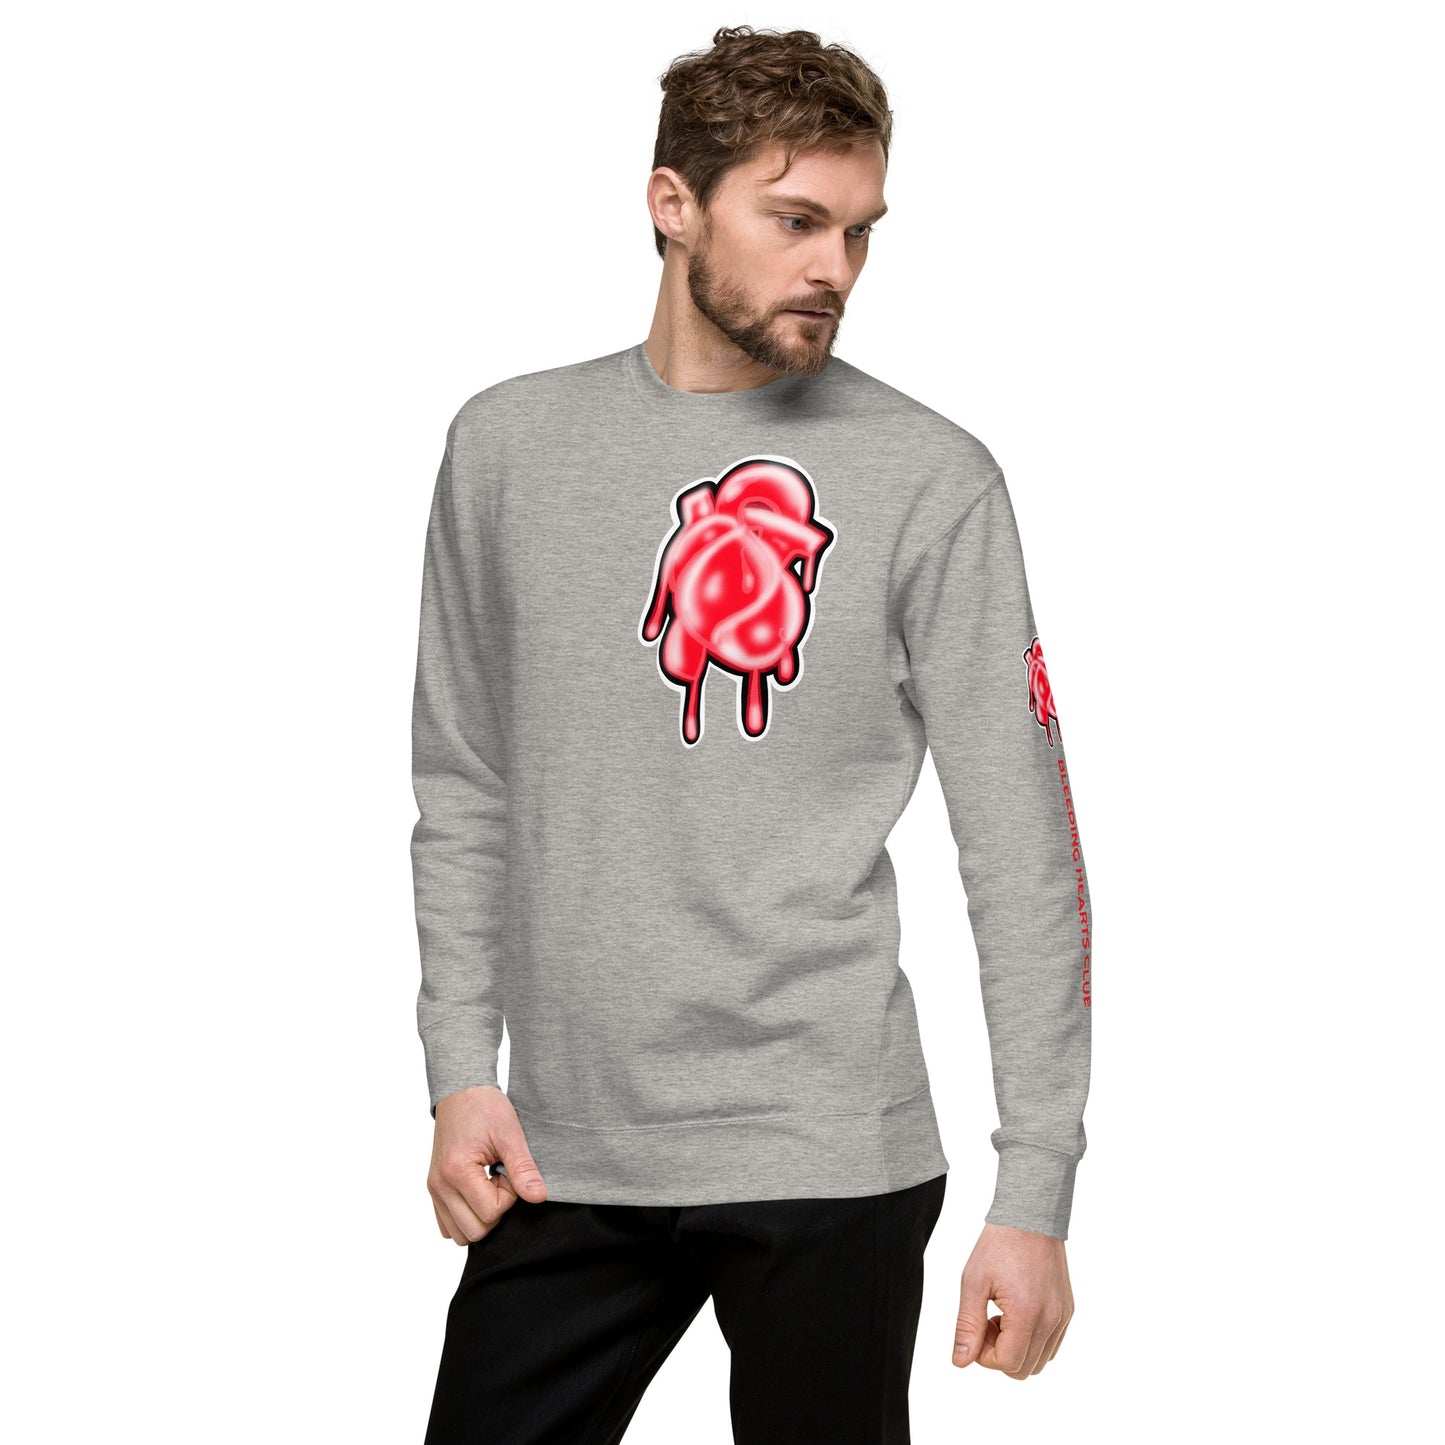 Bleeding Hearts Club - Unisex Premium Sweatshirt (S-3XL)